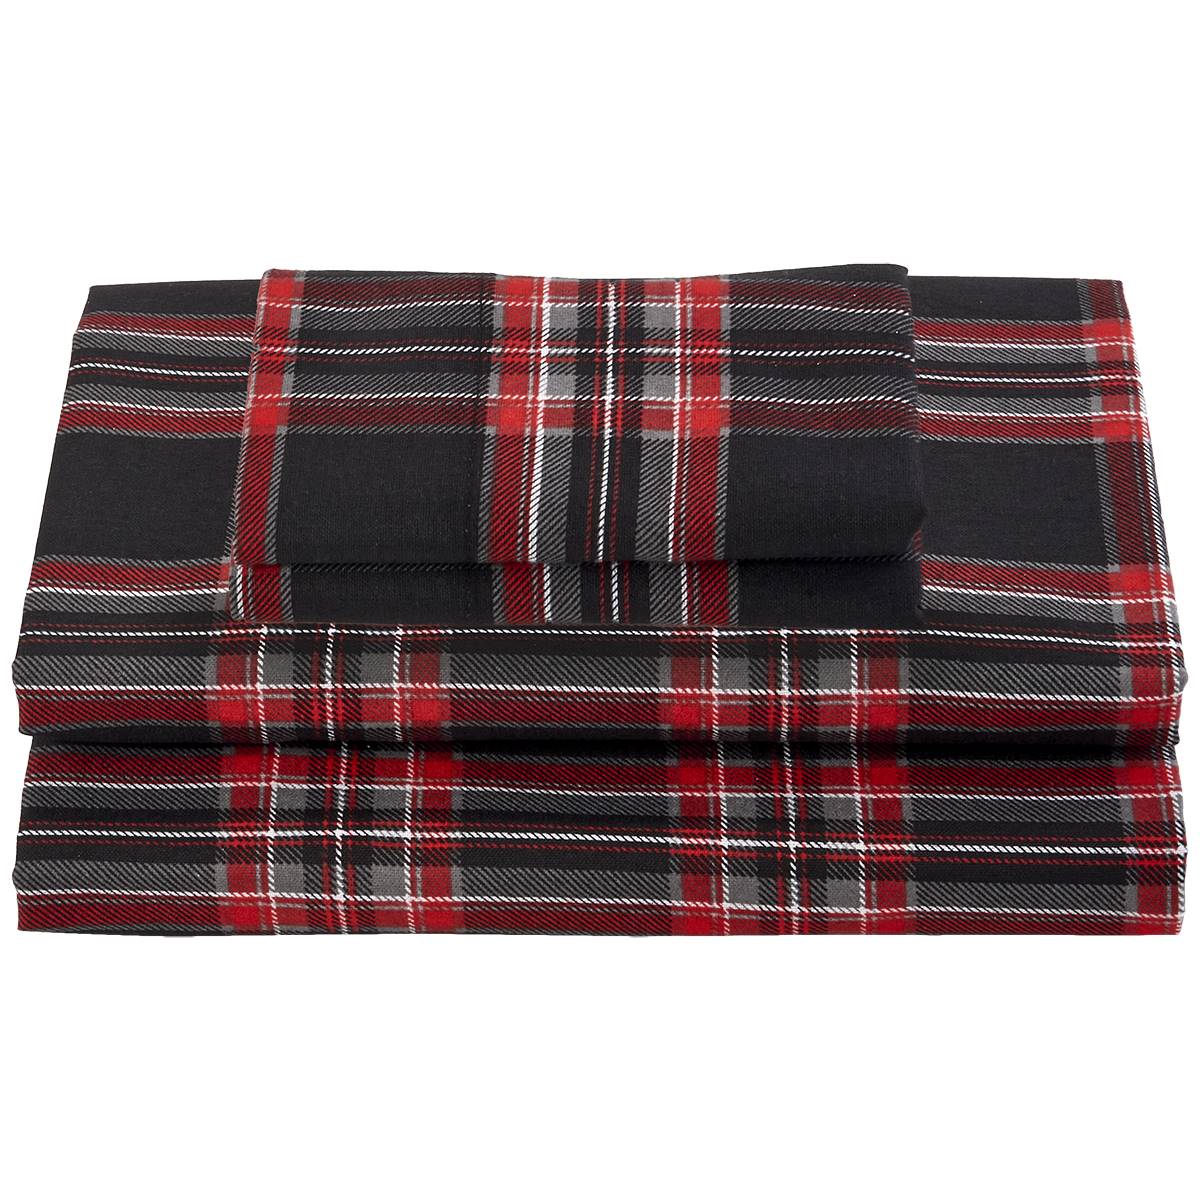 Ashley Cooper(tm) Endicott Plaid Flannel Sheet Set